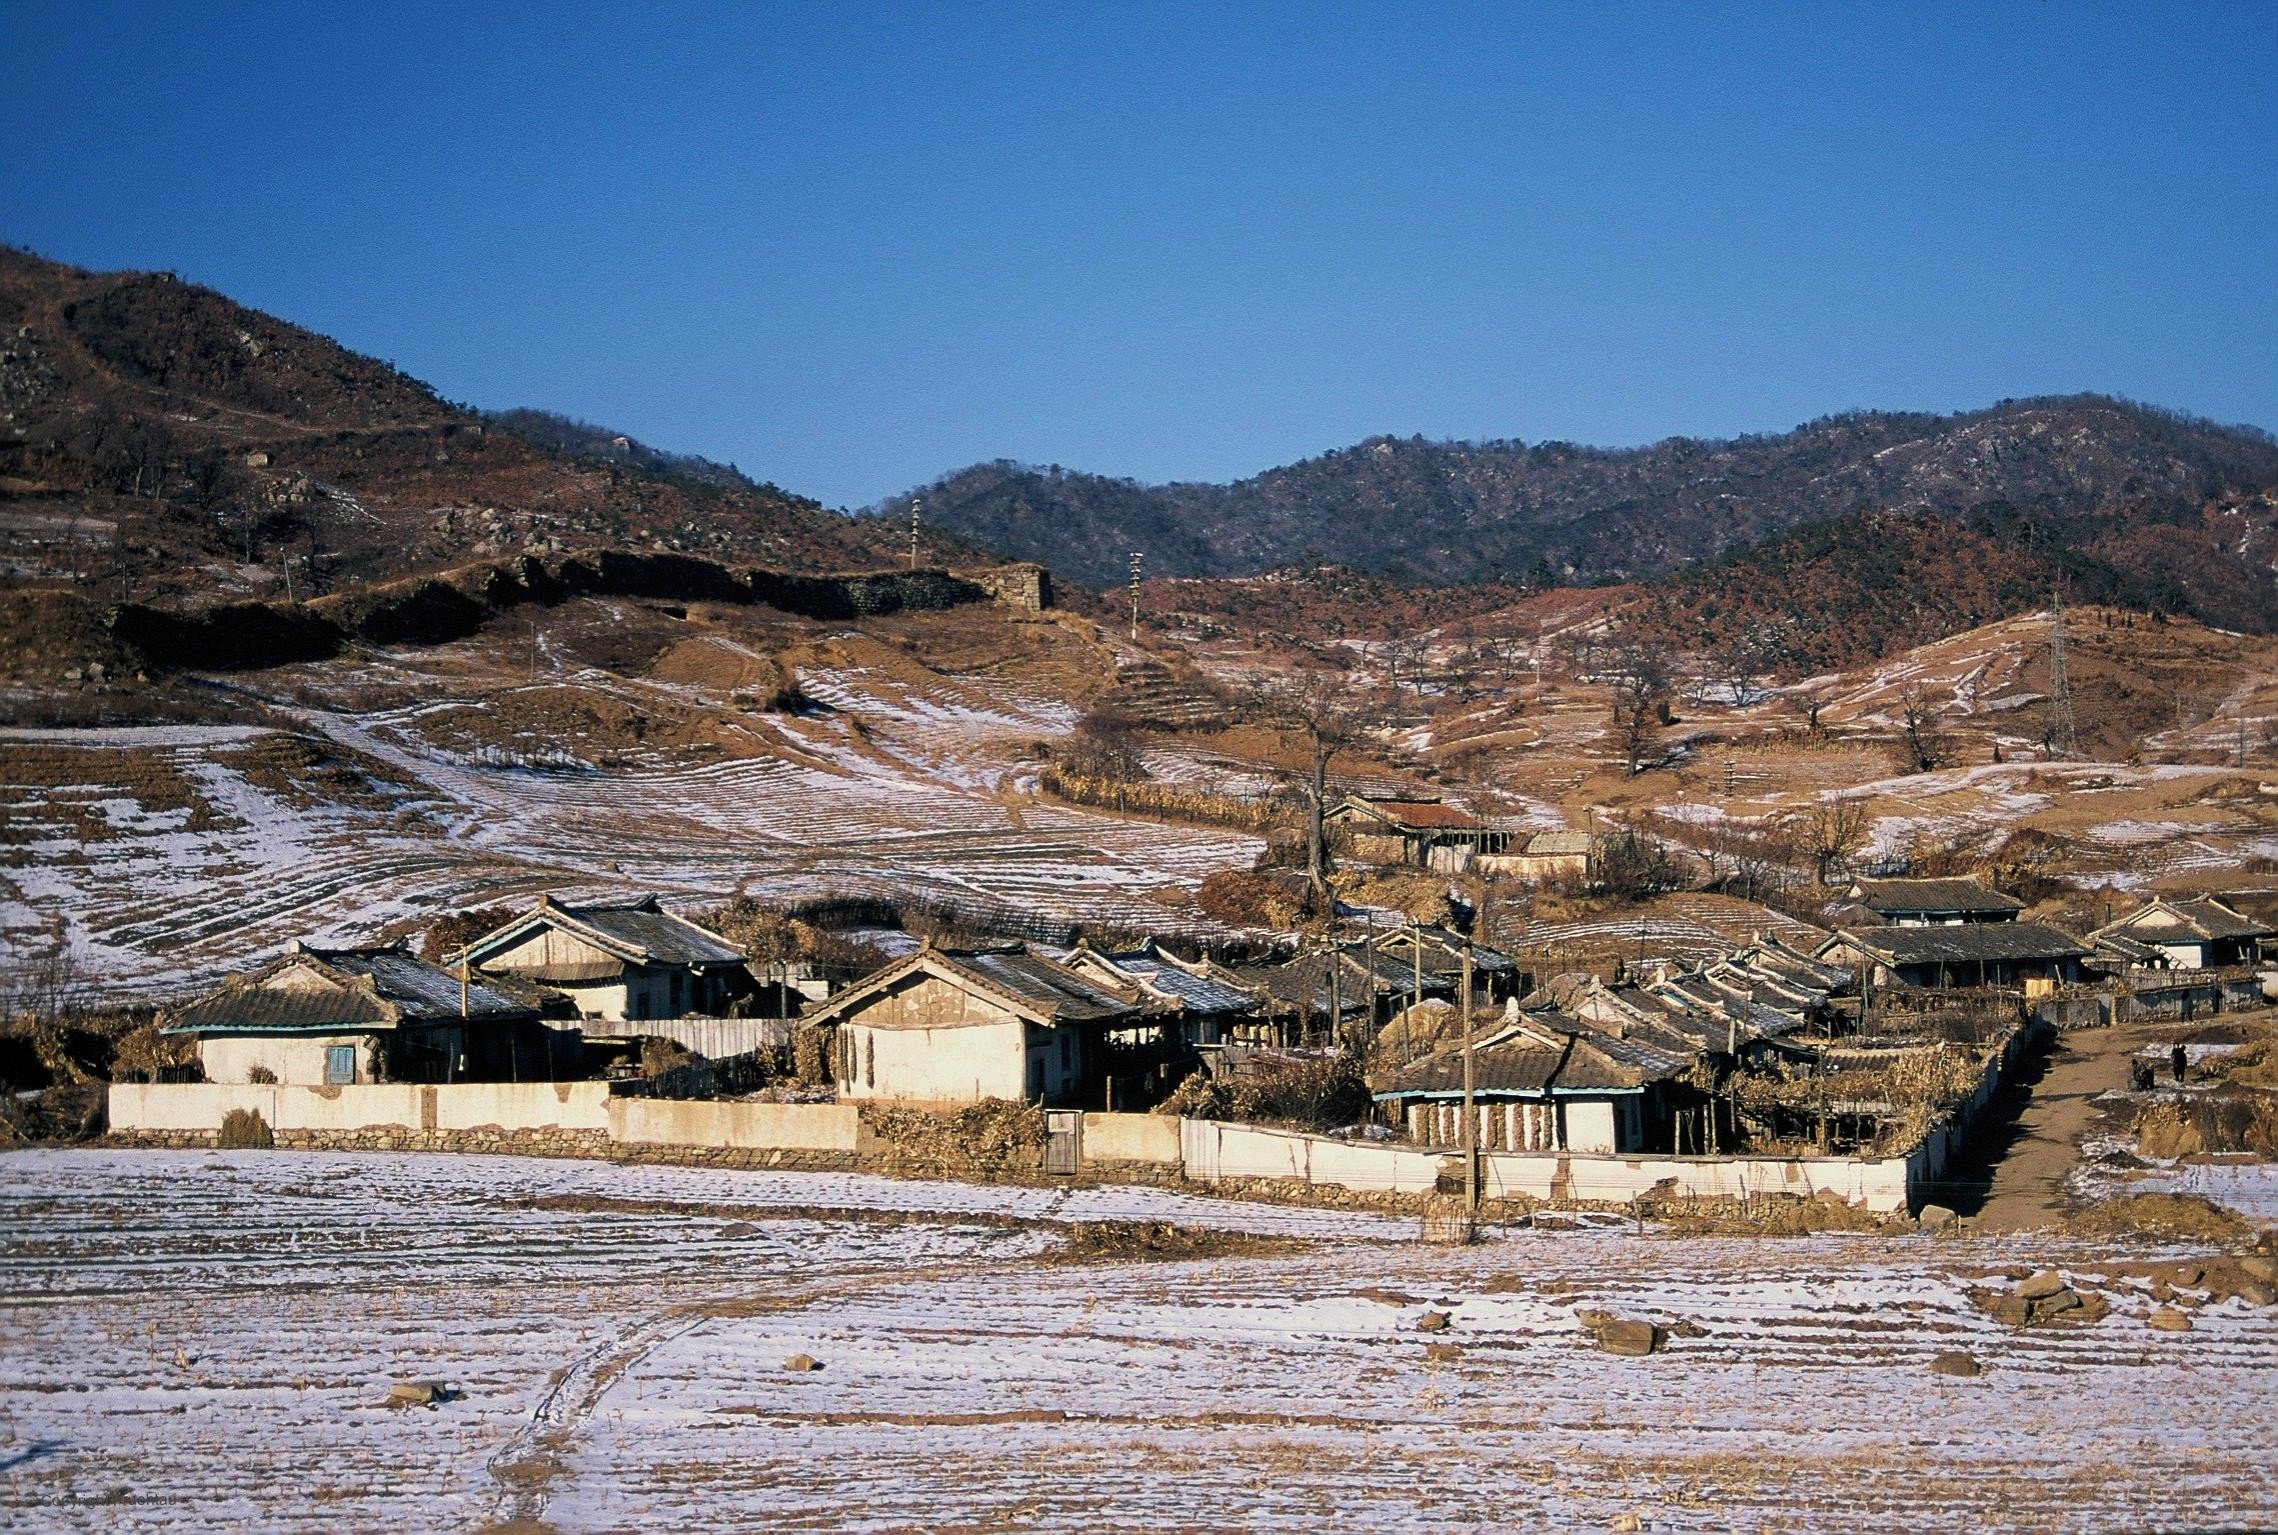 Best ideas about North Korea Landscape
. Save or Pin Villages and Landscapes of North Korea Frühtau’s s Now.